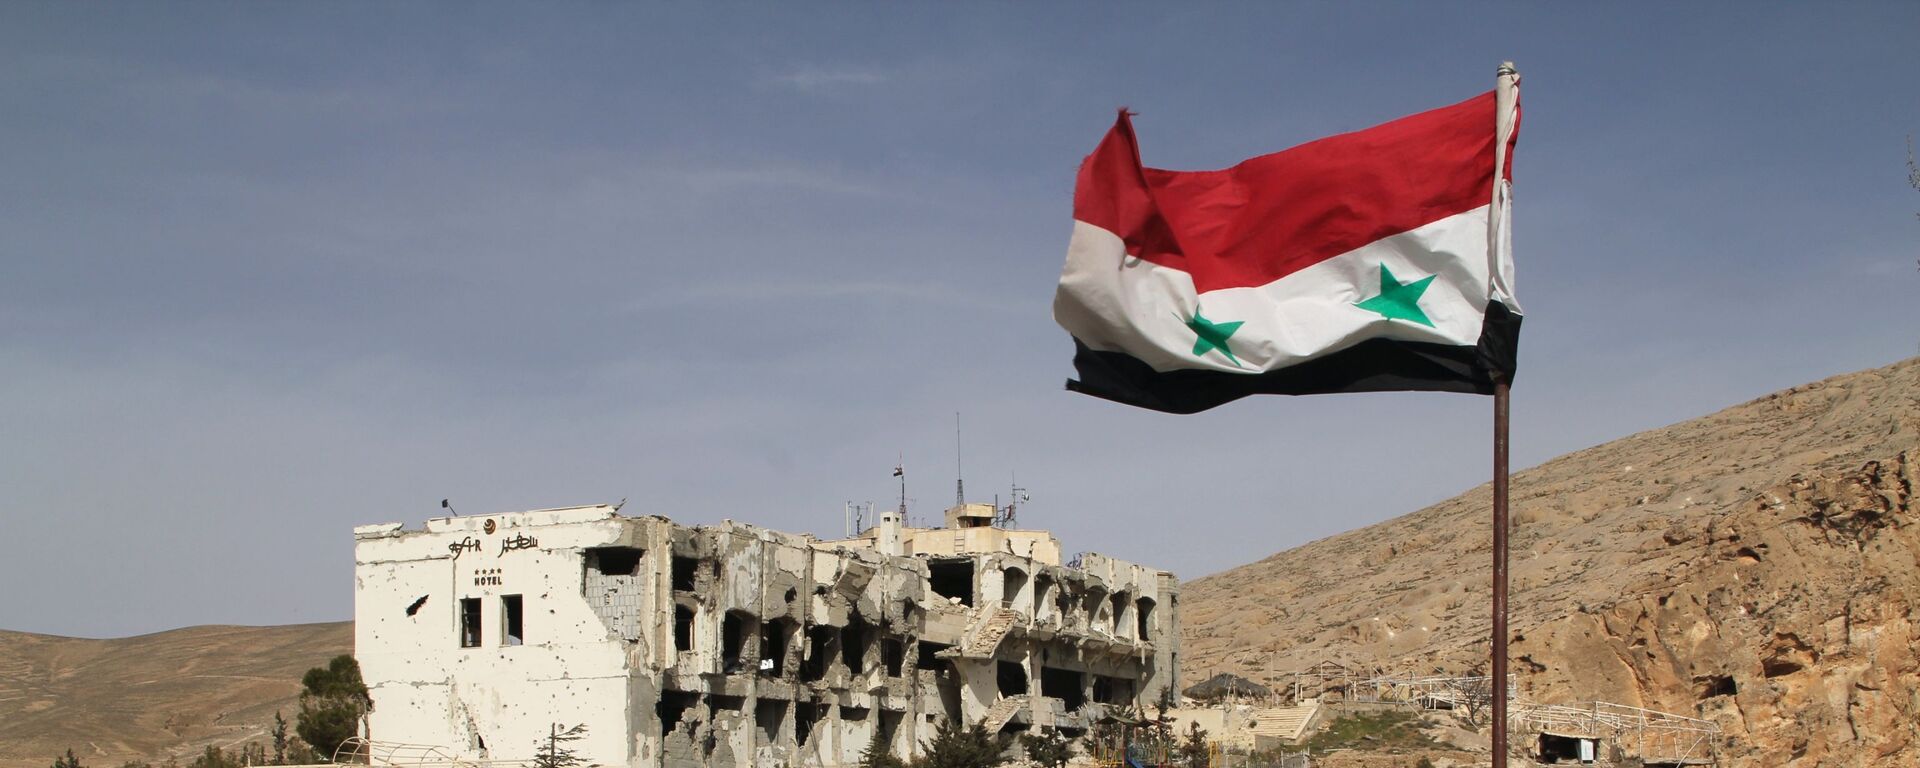 Сирийский флаг на фоне разрушенного дома в сирийском городе Маалюля - Sputnik Таджикистан, 1920, 28.03.2021